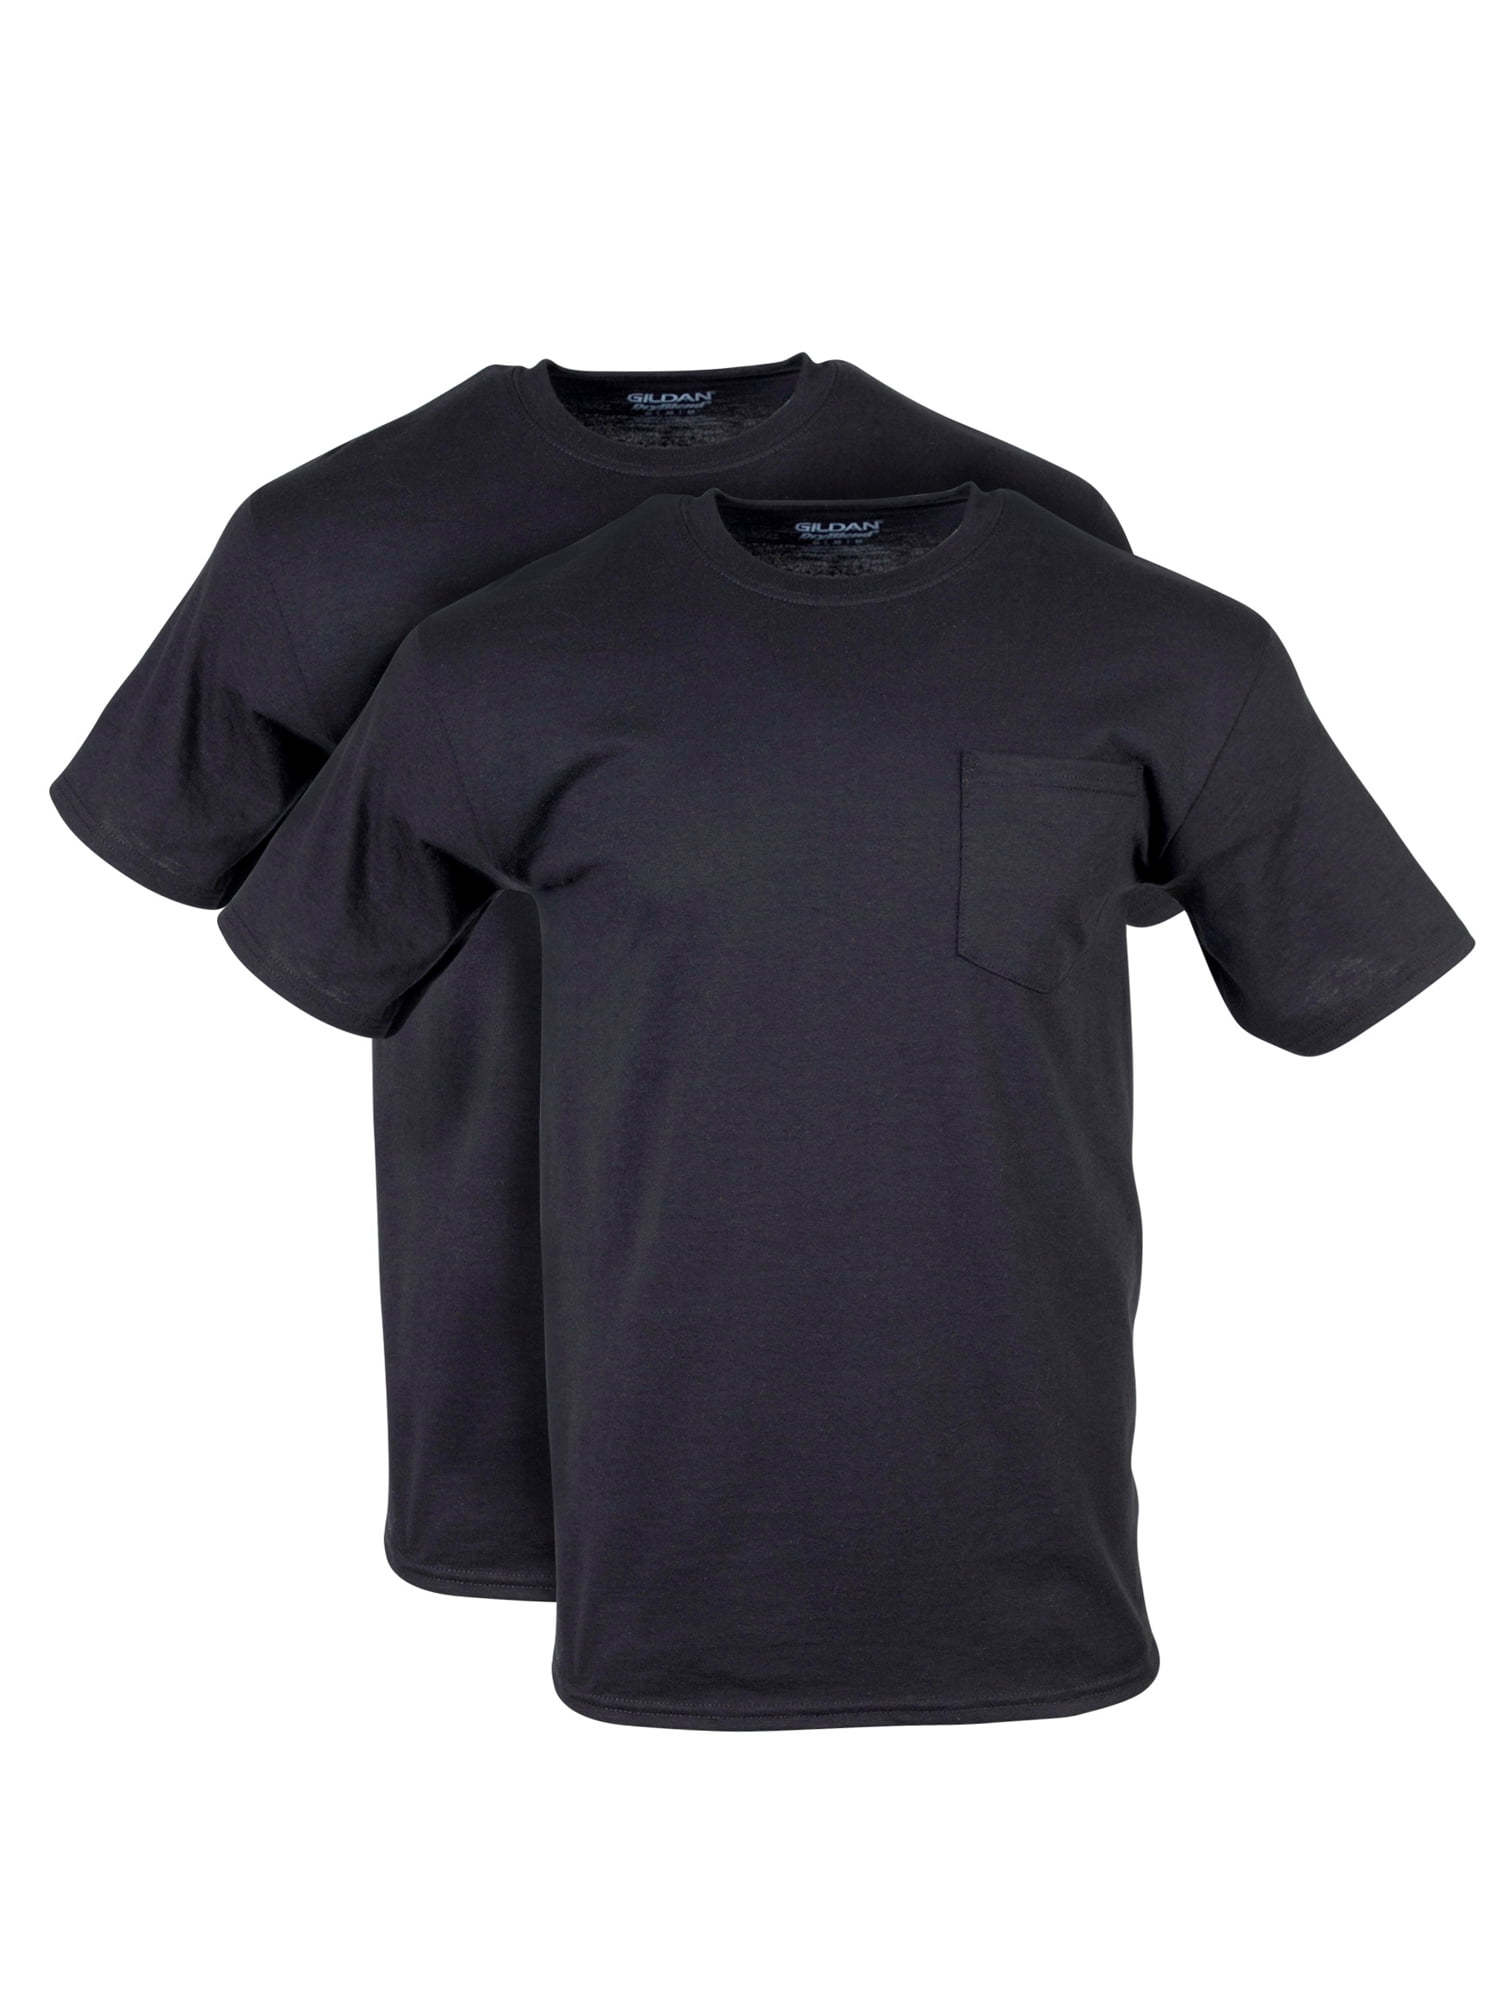 Men T-shirt Tops Buttons T-shirt Stylish Autumn Plaid Pockets Tops Sweater 